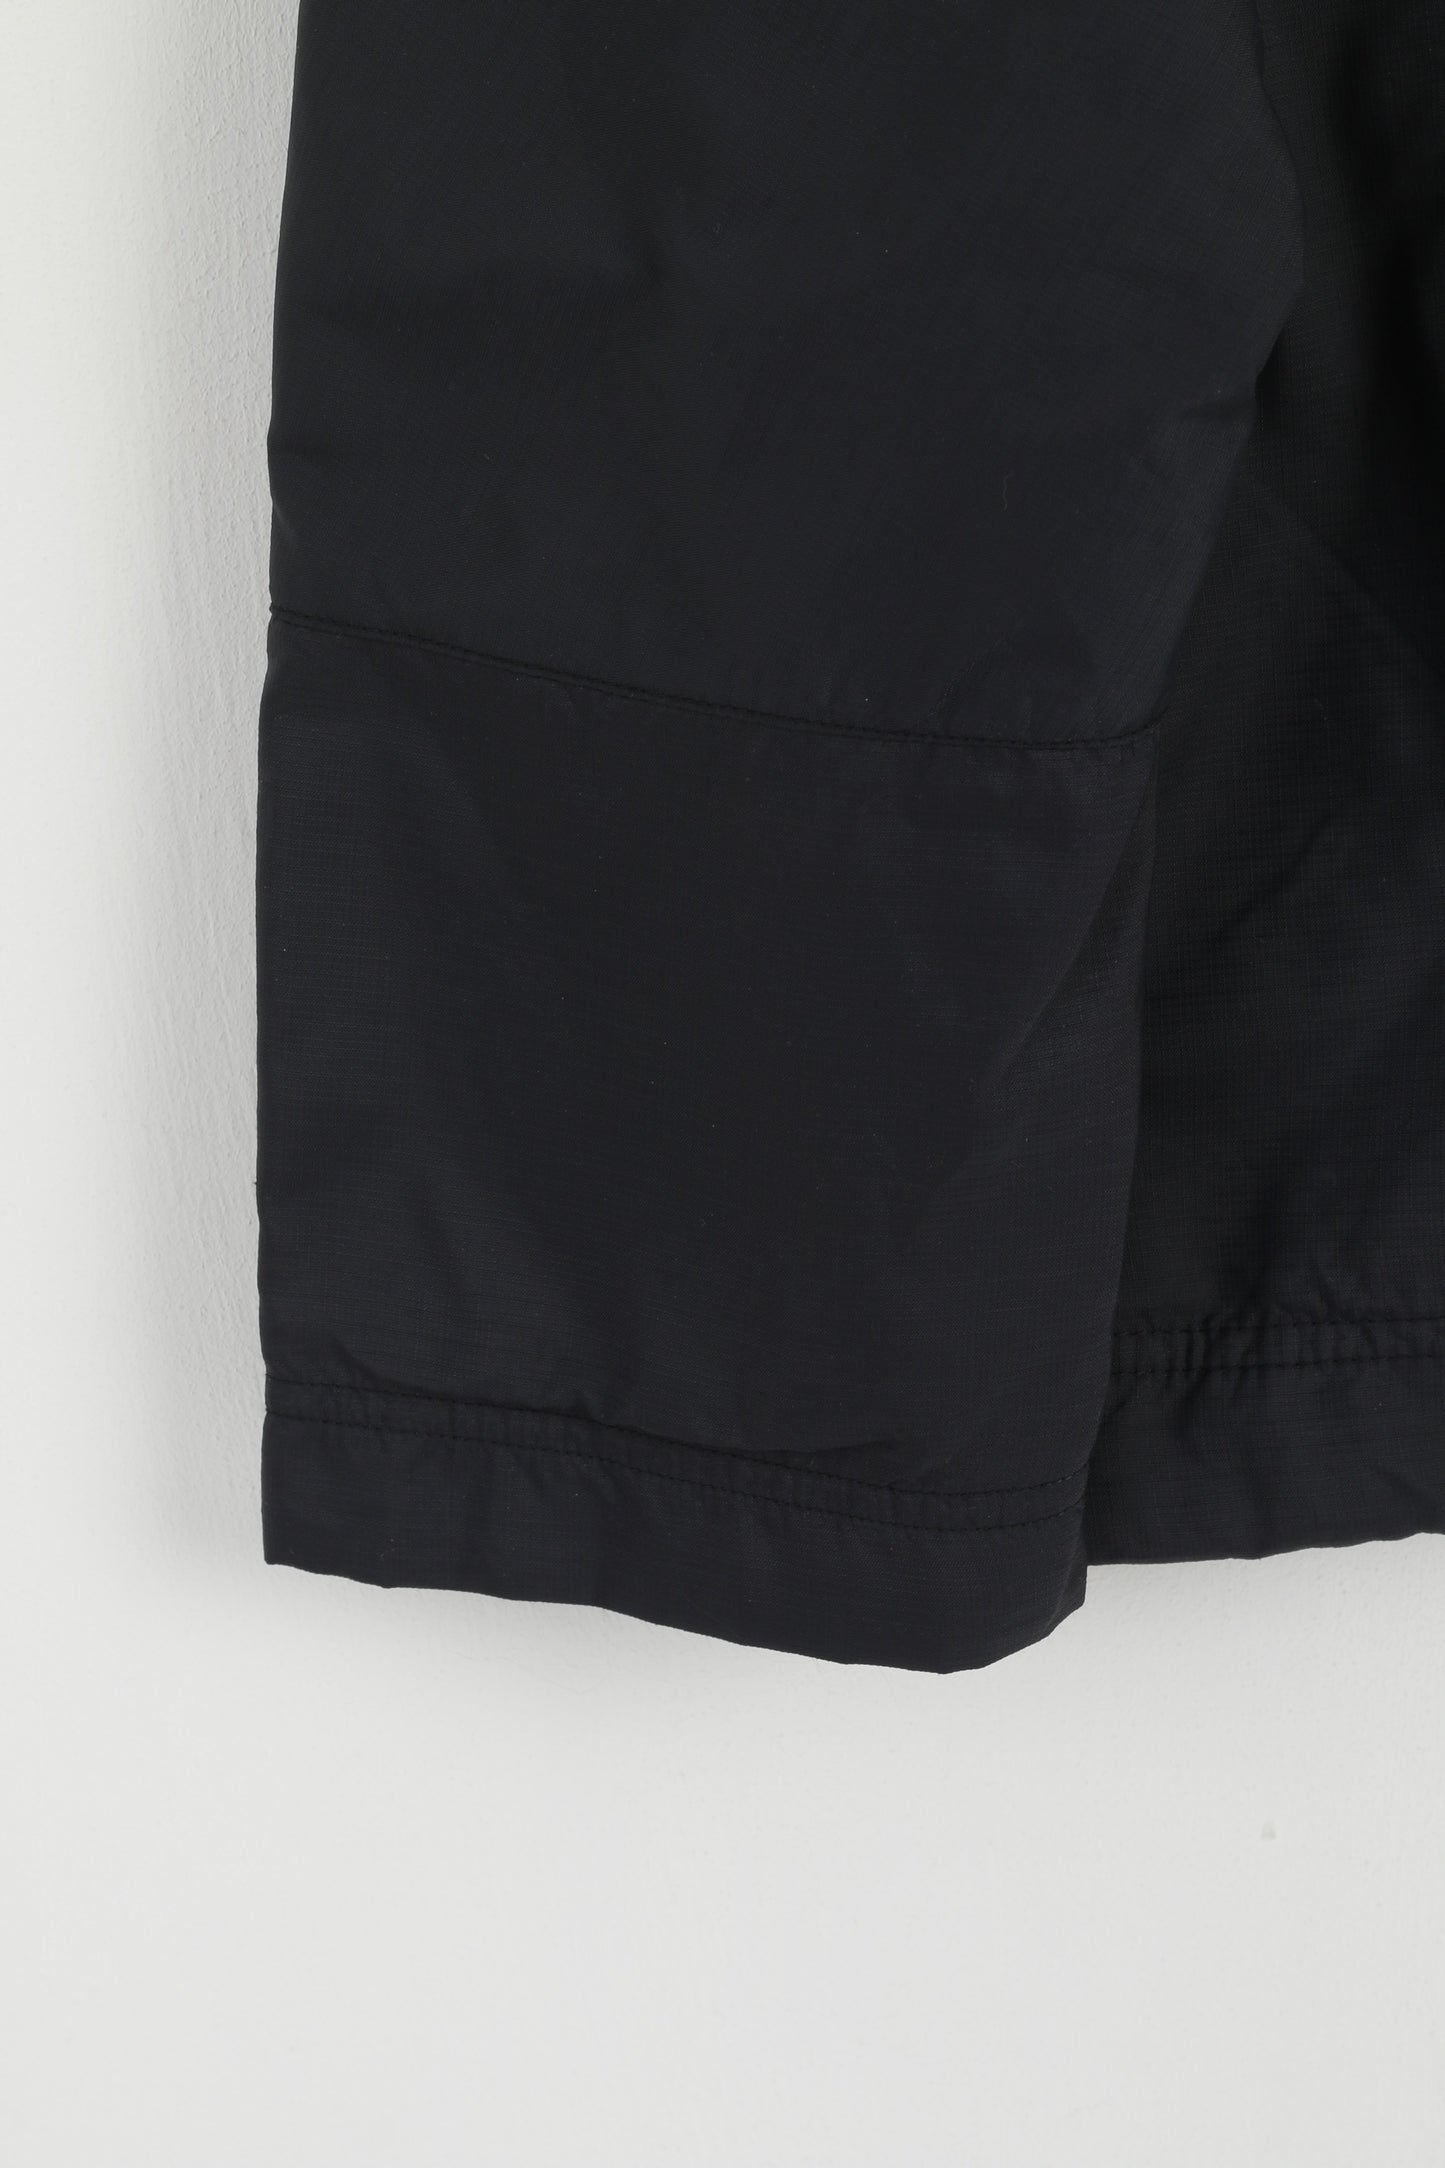 Nike Men M Jacket Black Pullover Activewear Retro Lightweight Pocket Sport Top